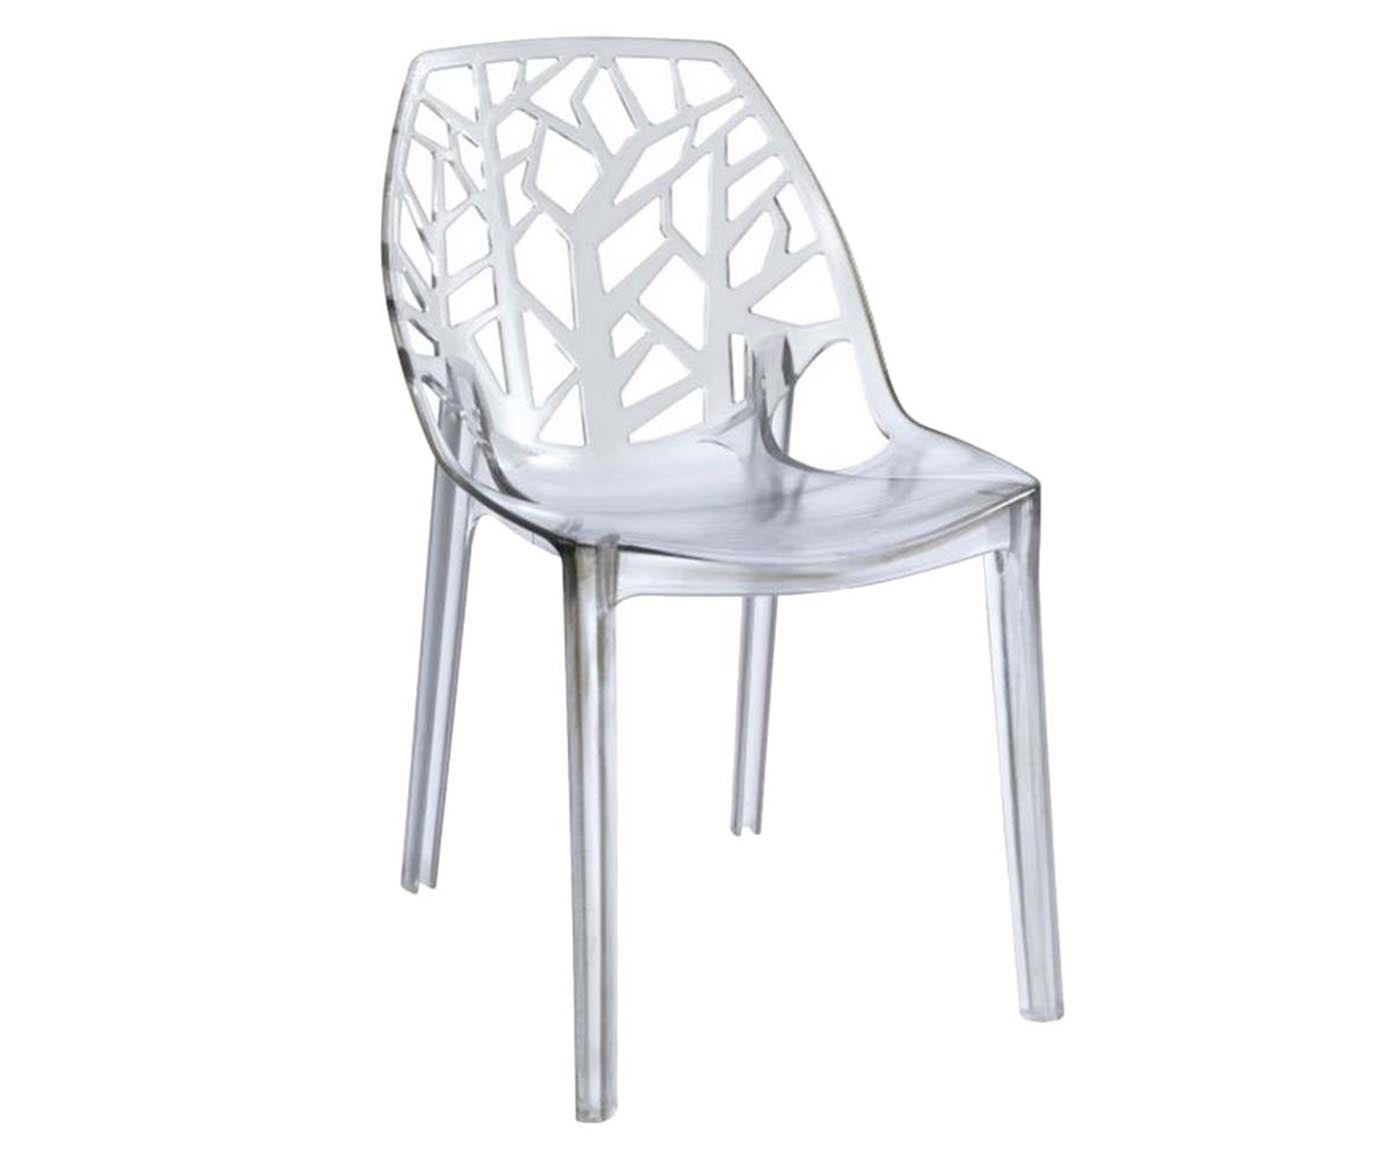 Cadeira kiruna - clear | Westwing.com.br